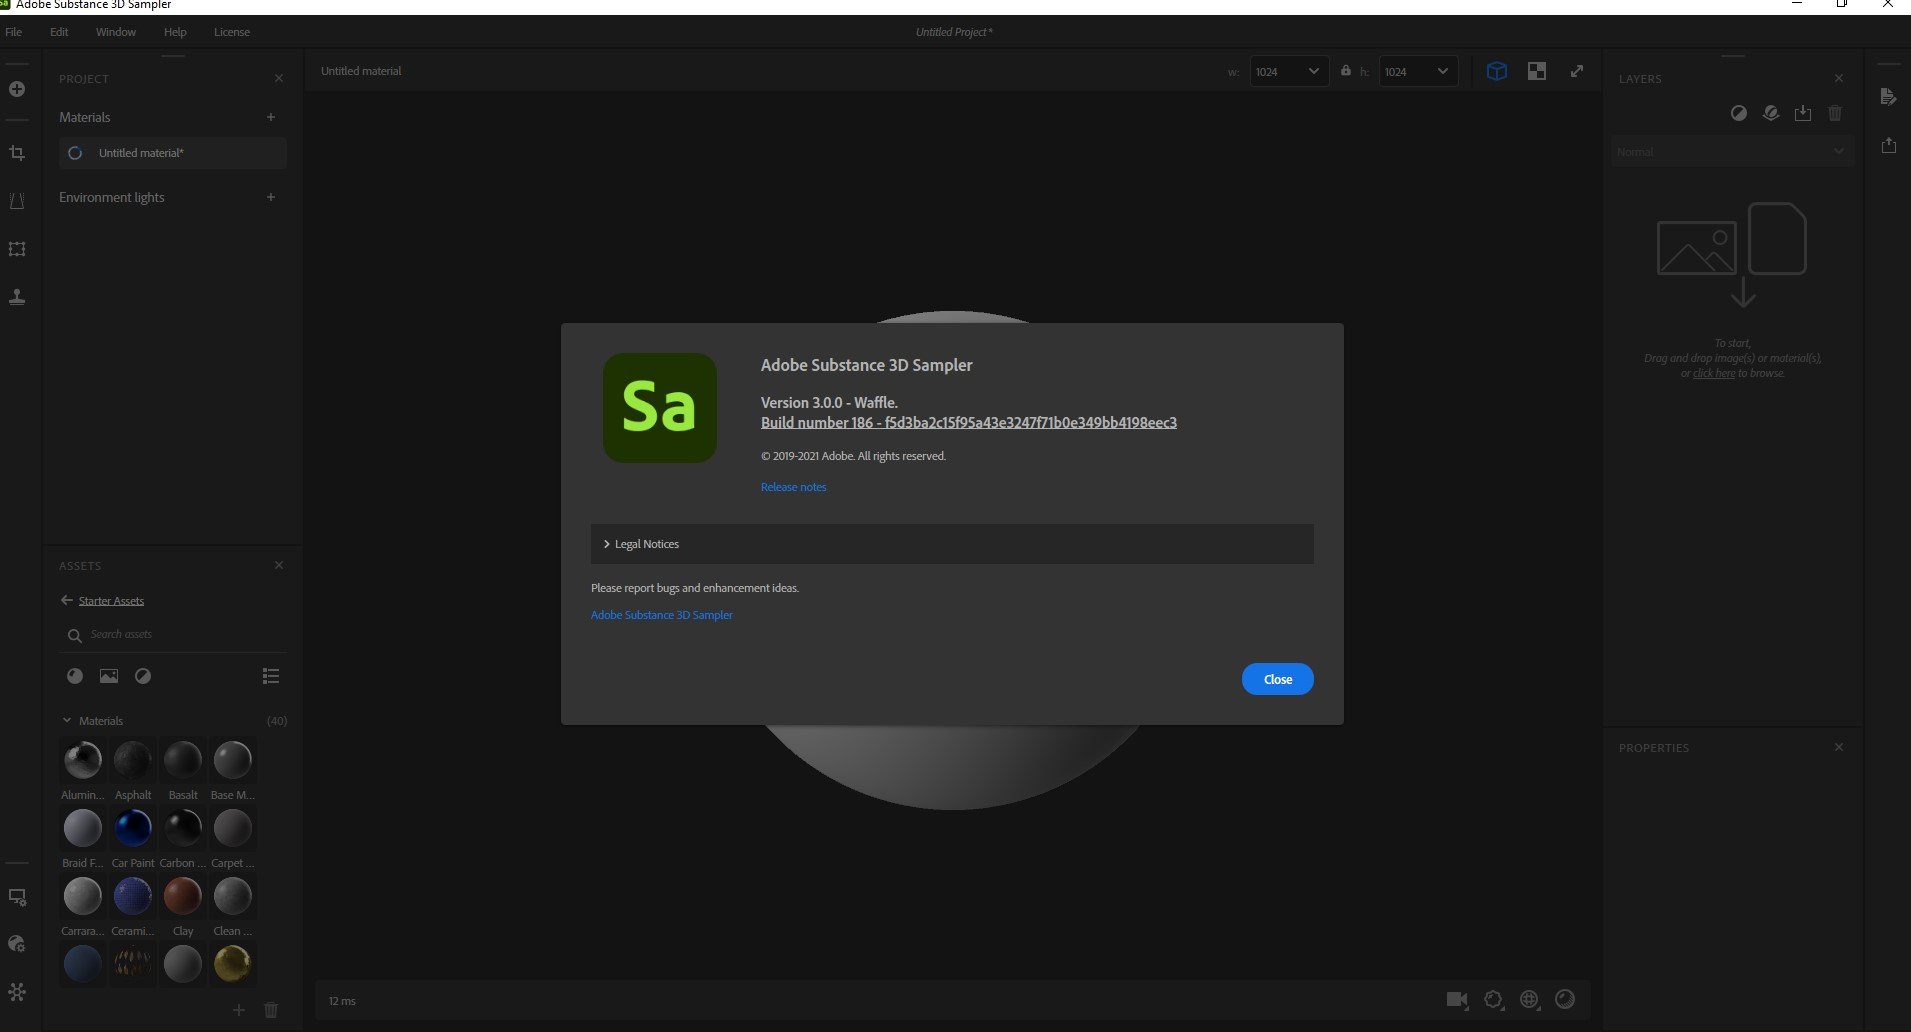 Adobe Substance 3D Sampler 4.1.2.3298 instal the new for windows